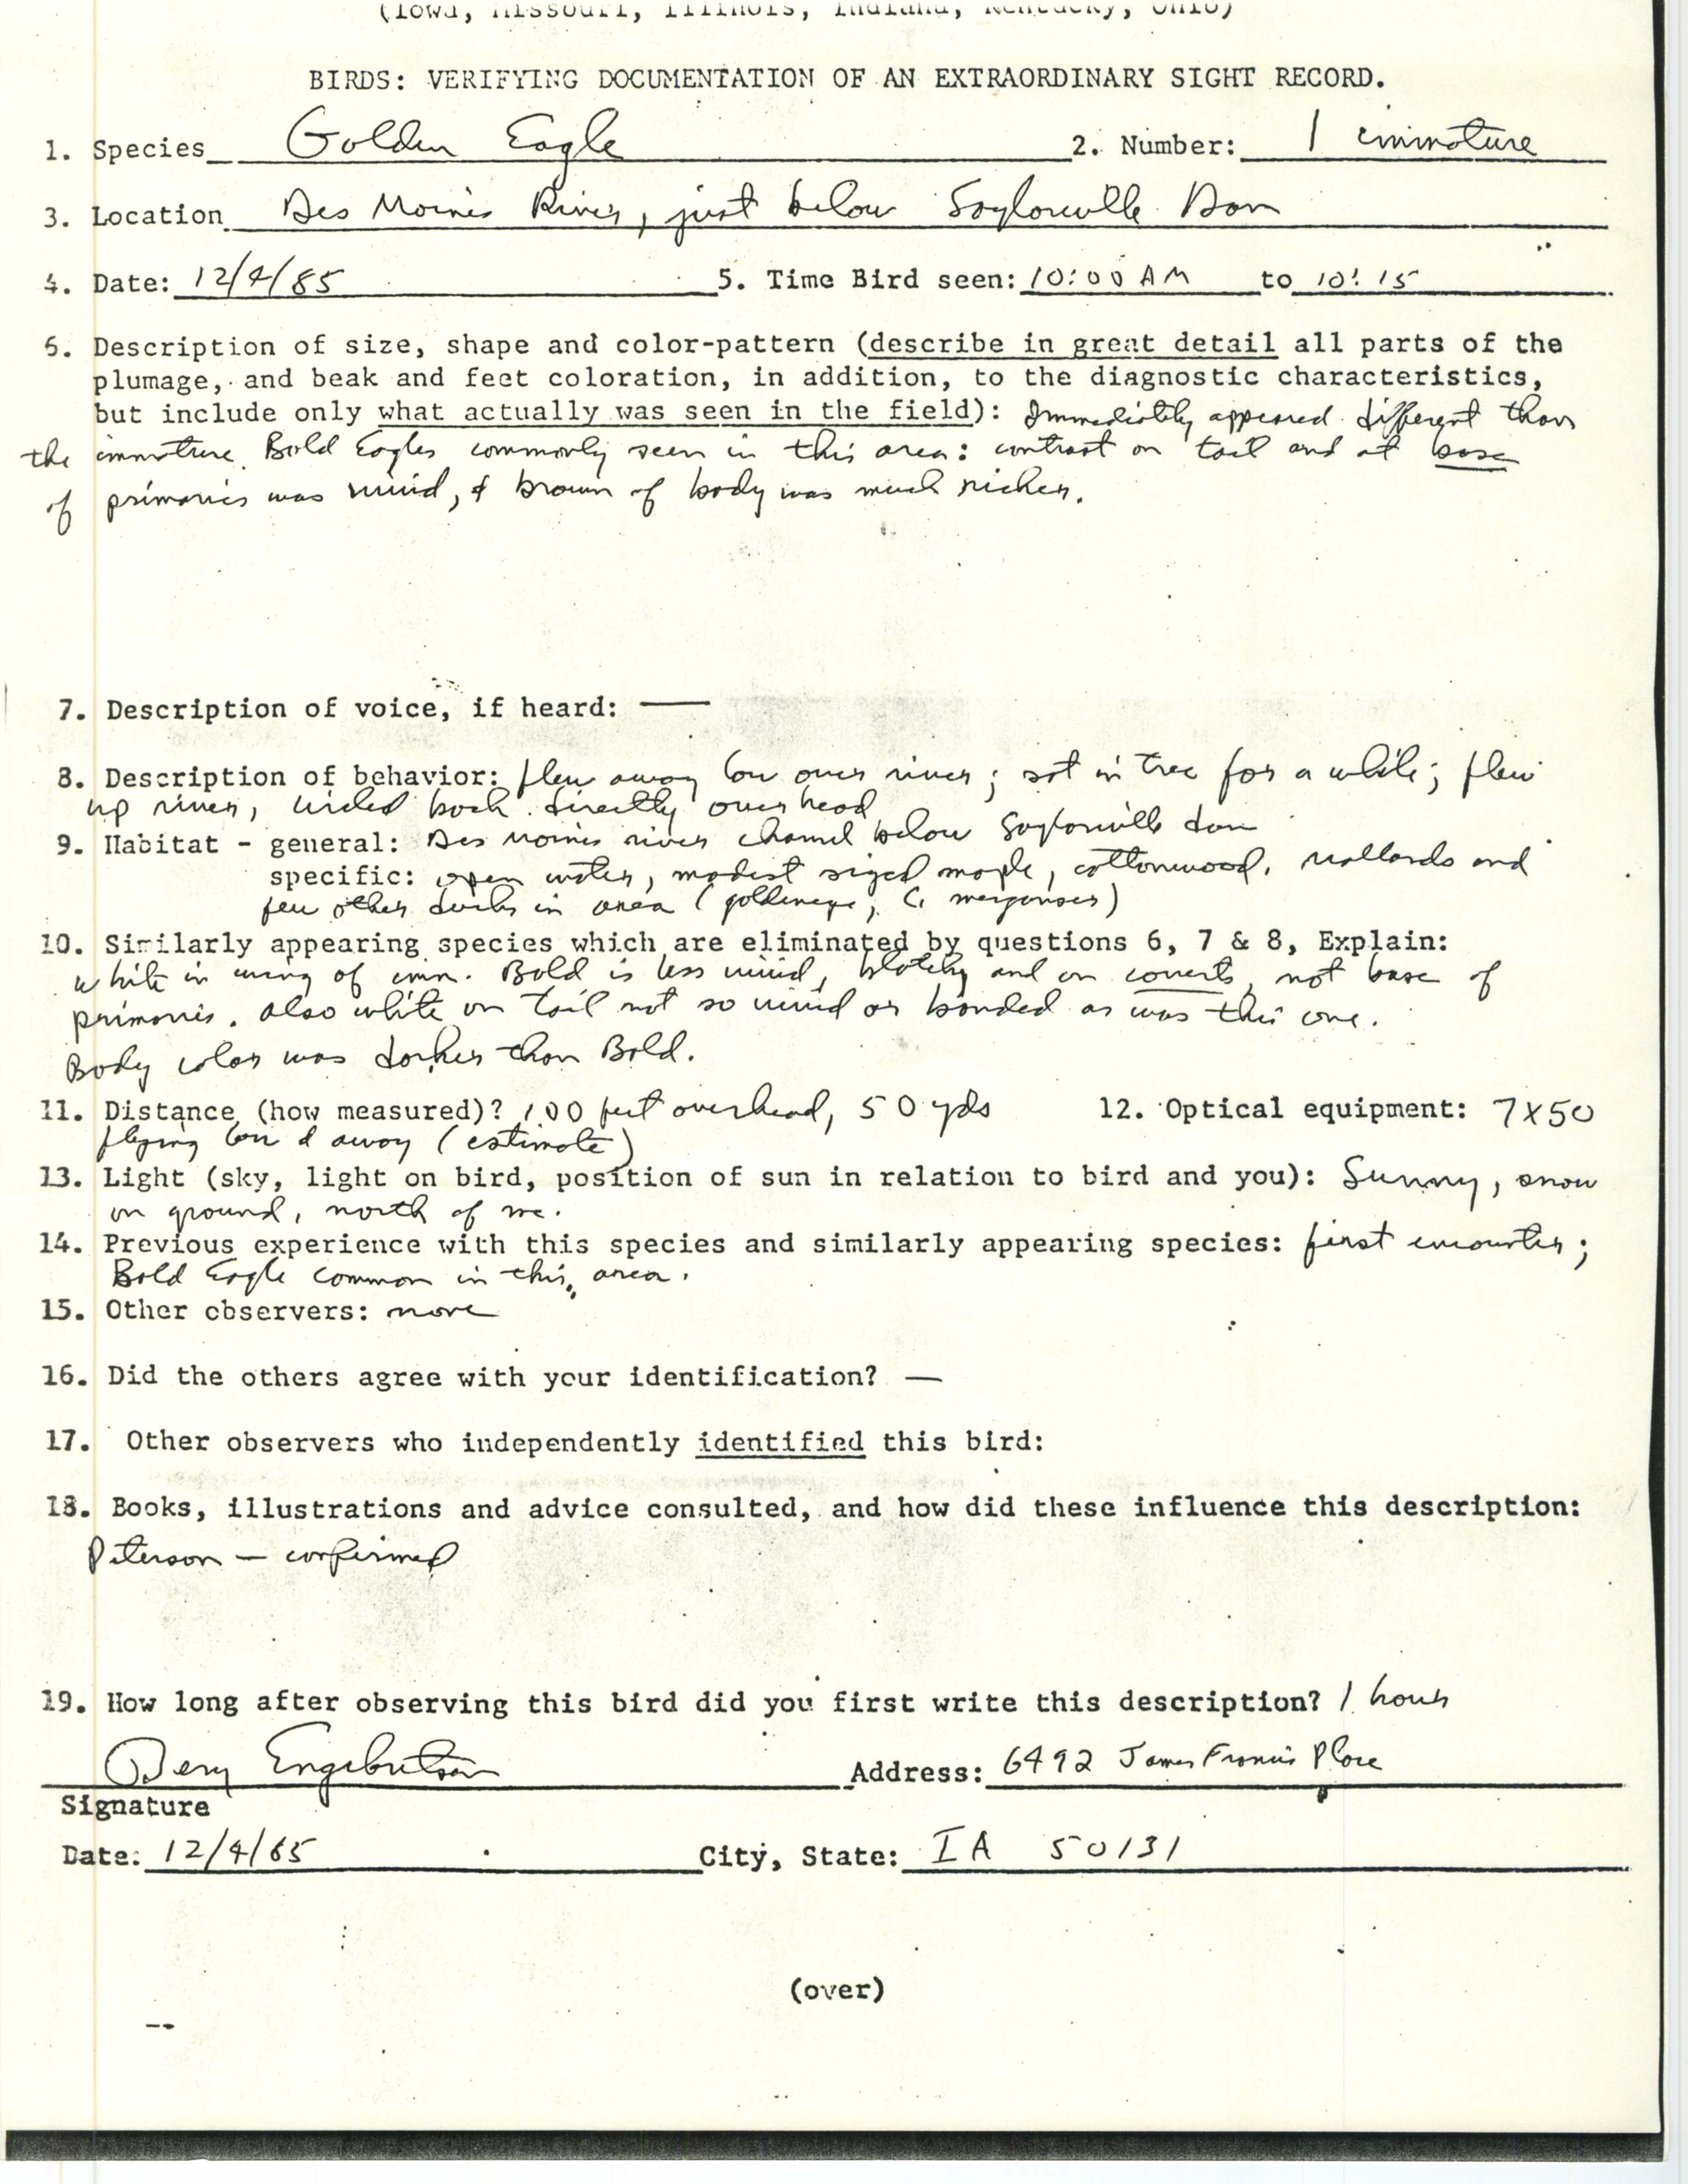 Rare bird documentation form for Golden Eagle near Saylorville Dam, 1985